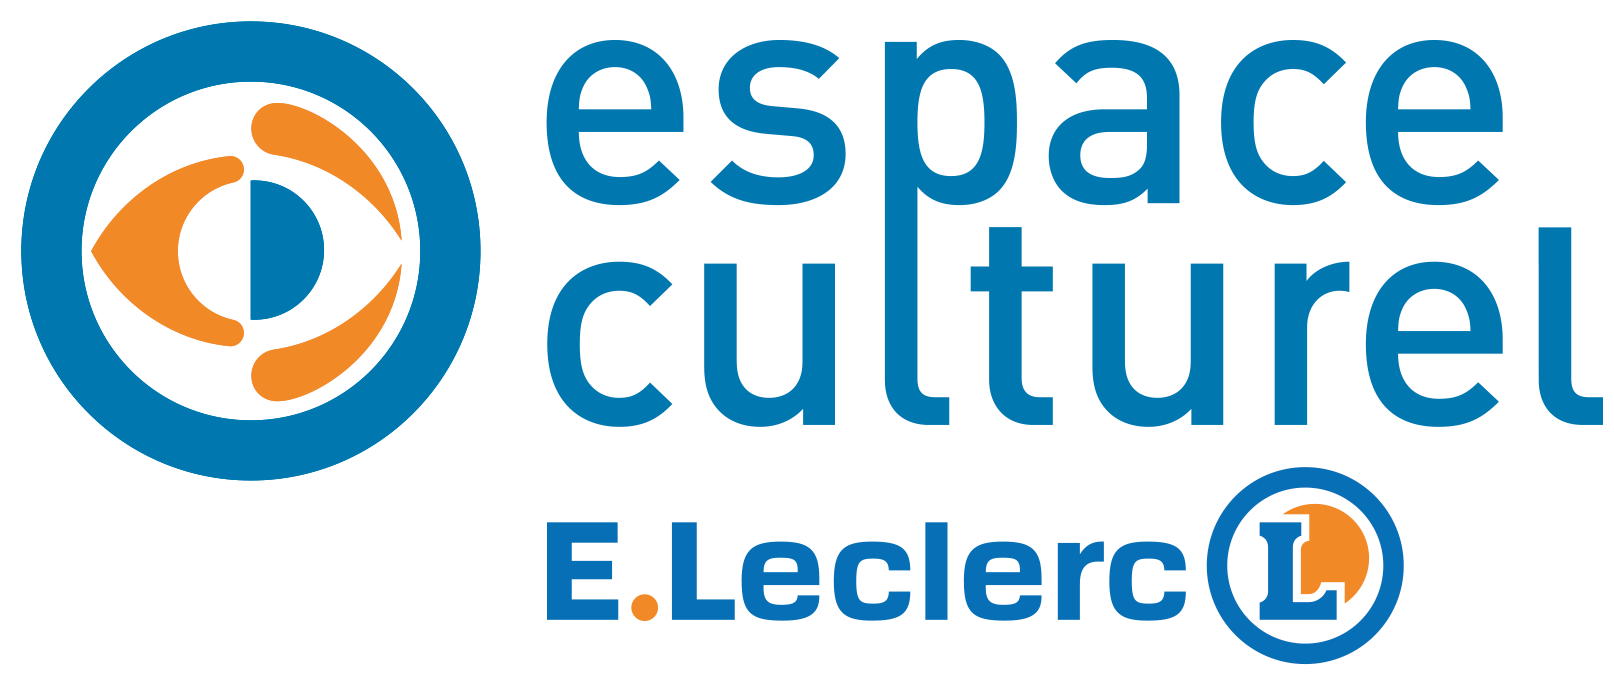 Espace culturel E.Leclerc